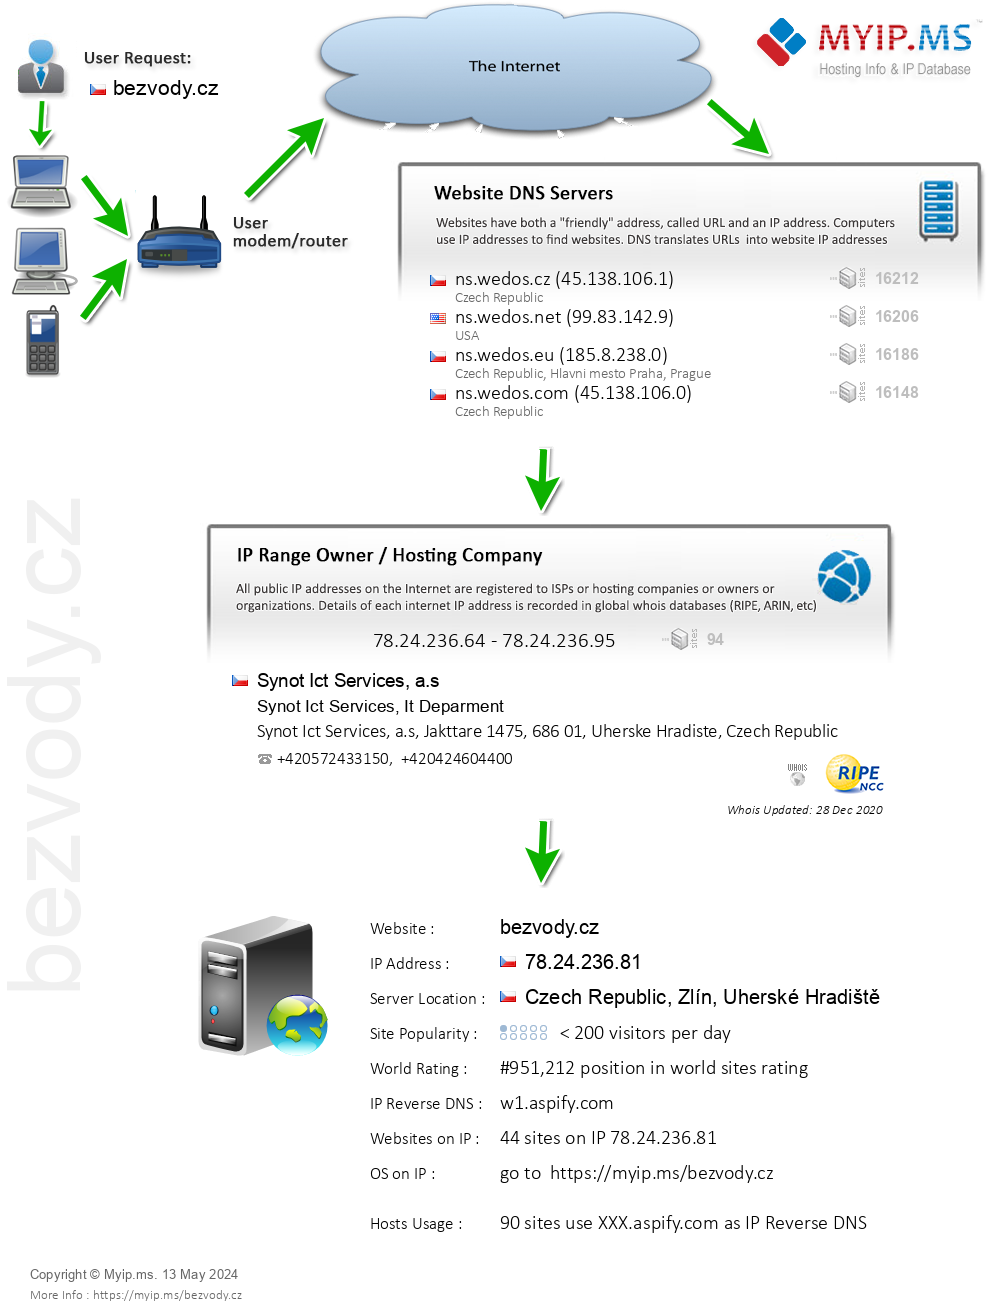 Bezvody.cz - Website Hosting Visual IP Diagram